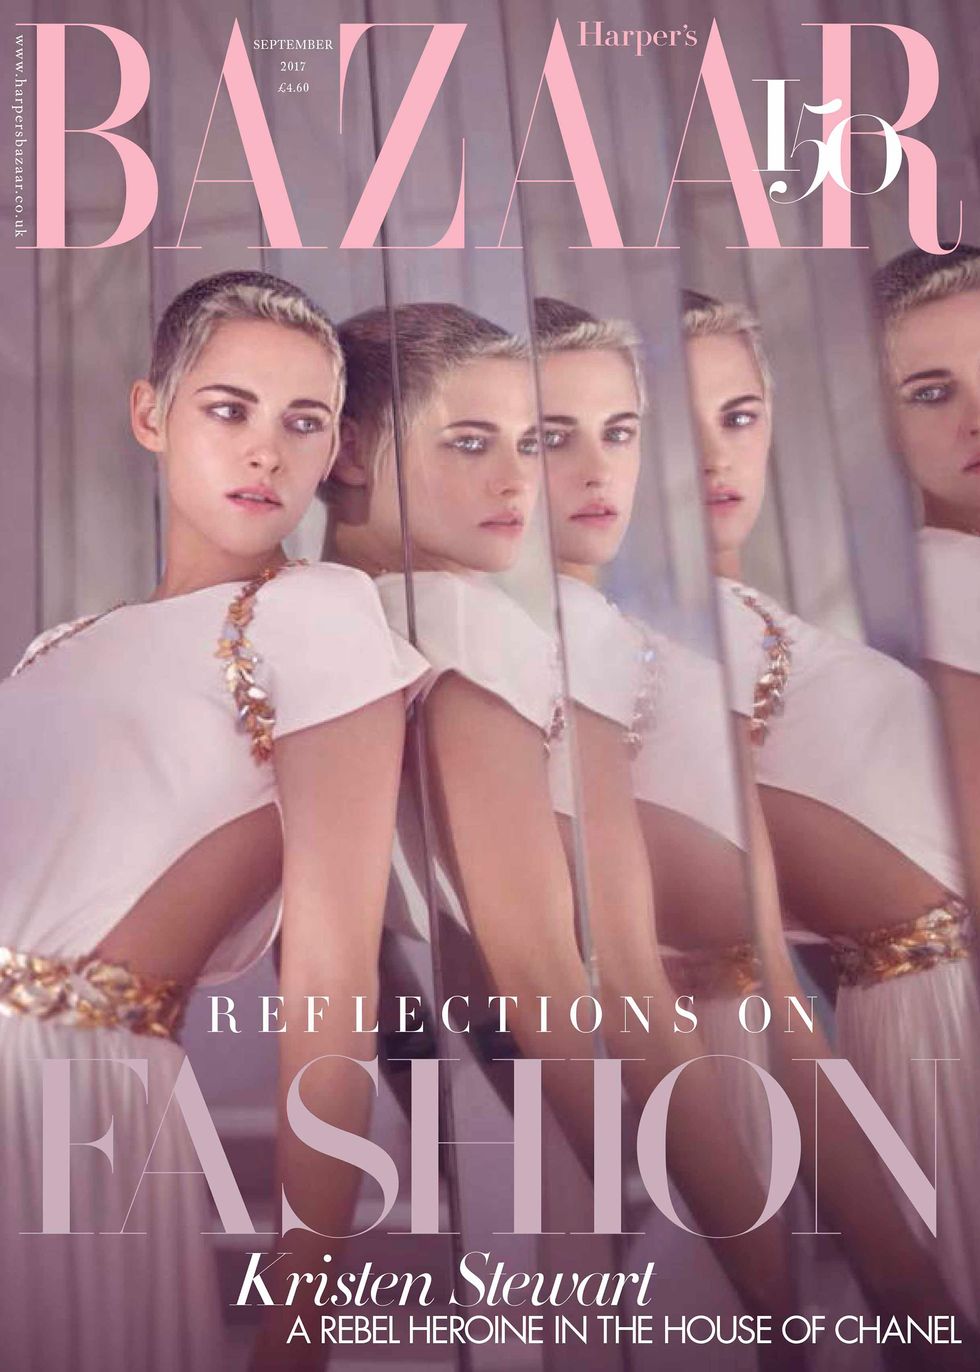 Kristen Stewart in the September issue of Harper's Bazaar